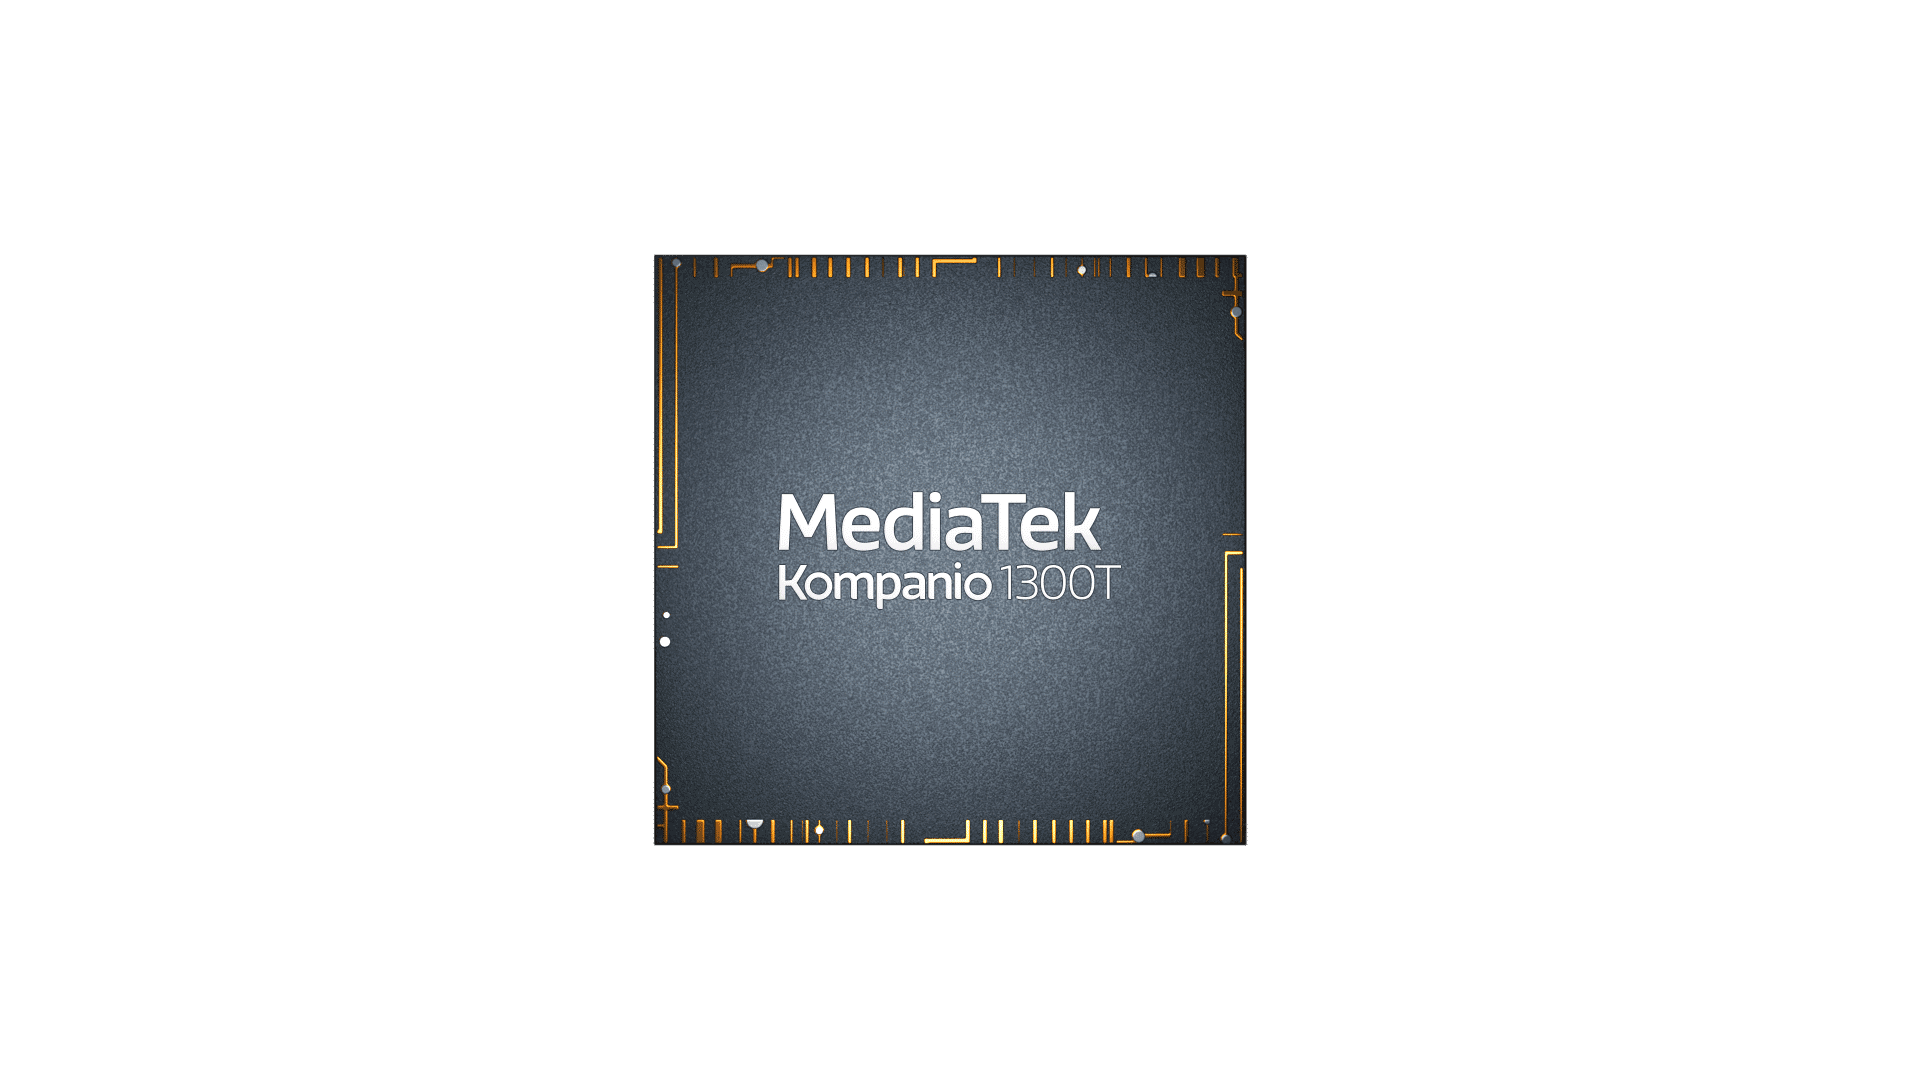 MediaTek เปิดตัวแพลตฟอร์ม Kompanio 1300T เพื่อยกระดับประสบการณ์การใช้คอมพิวเตอร์ระดับเรือธงในแท็บเล็ต 21